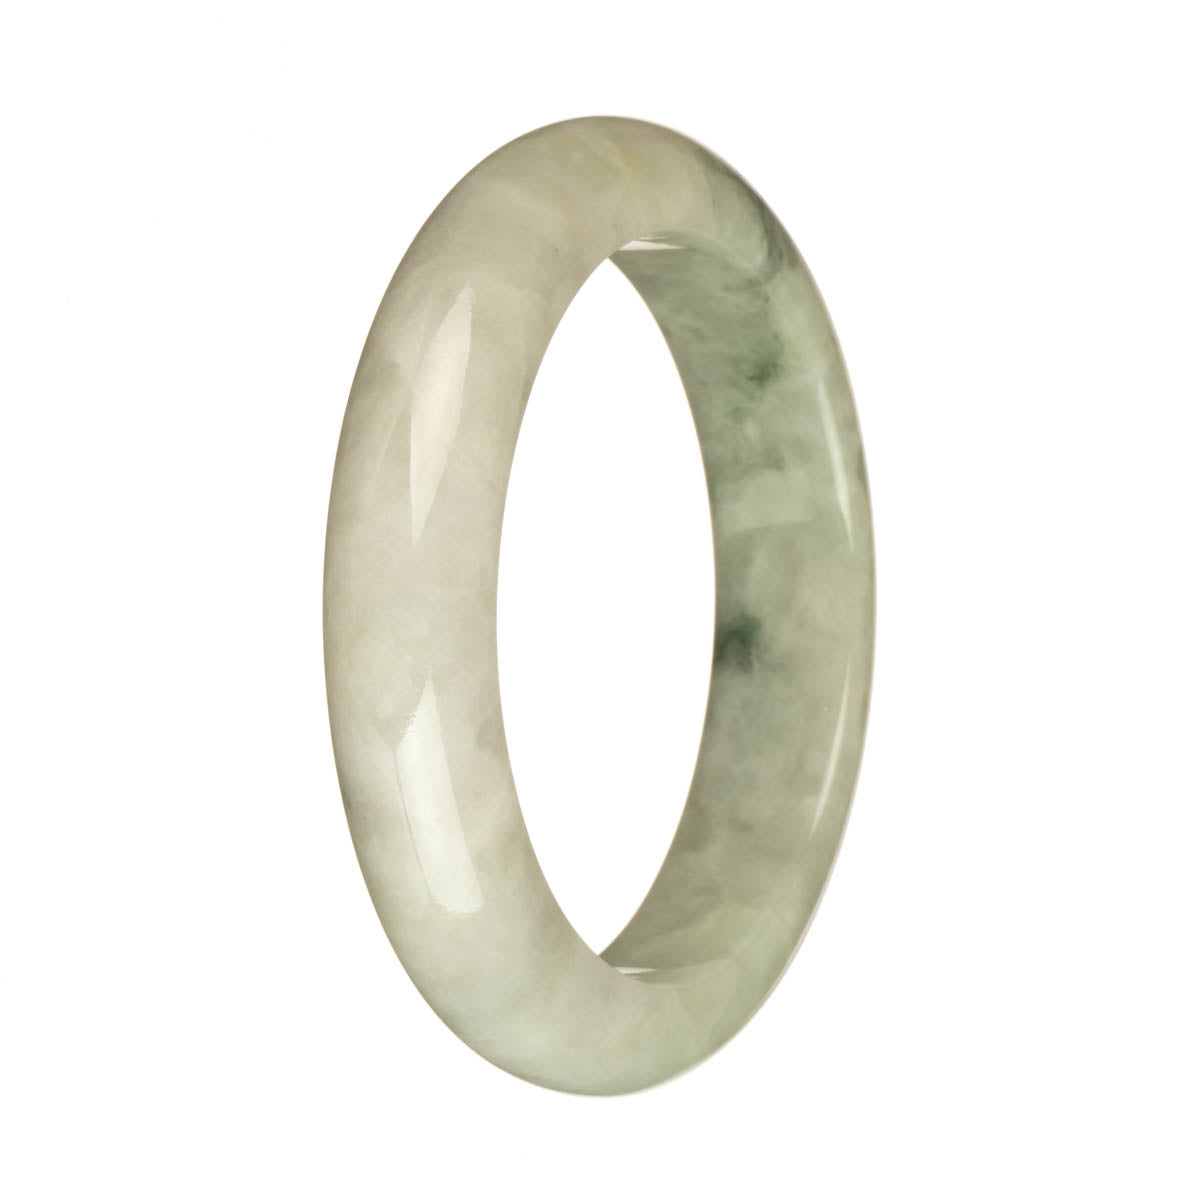 Genuine Type A Greyish White with Deep Green Patterns Jade Bangle Bracelet - 58mm Half Moon